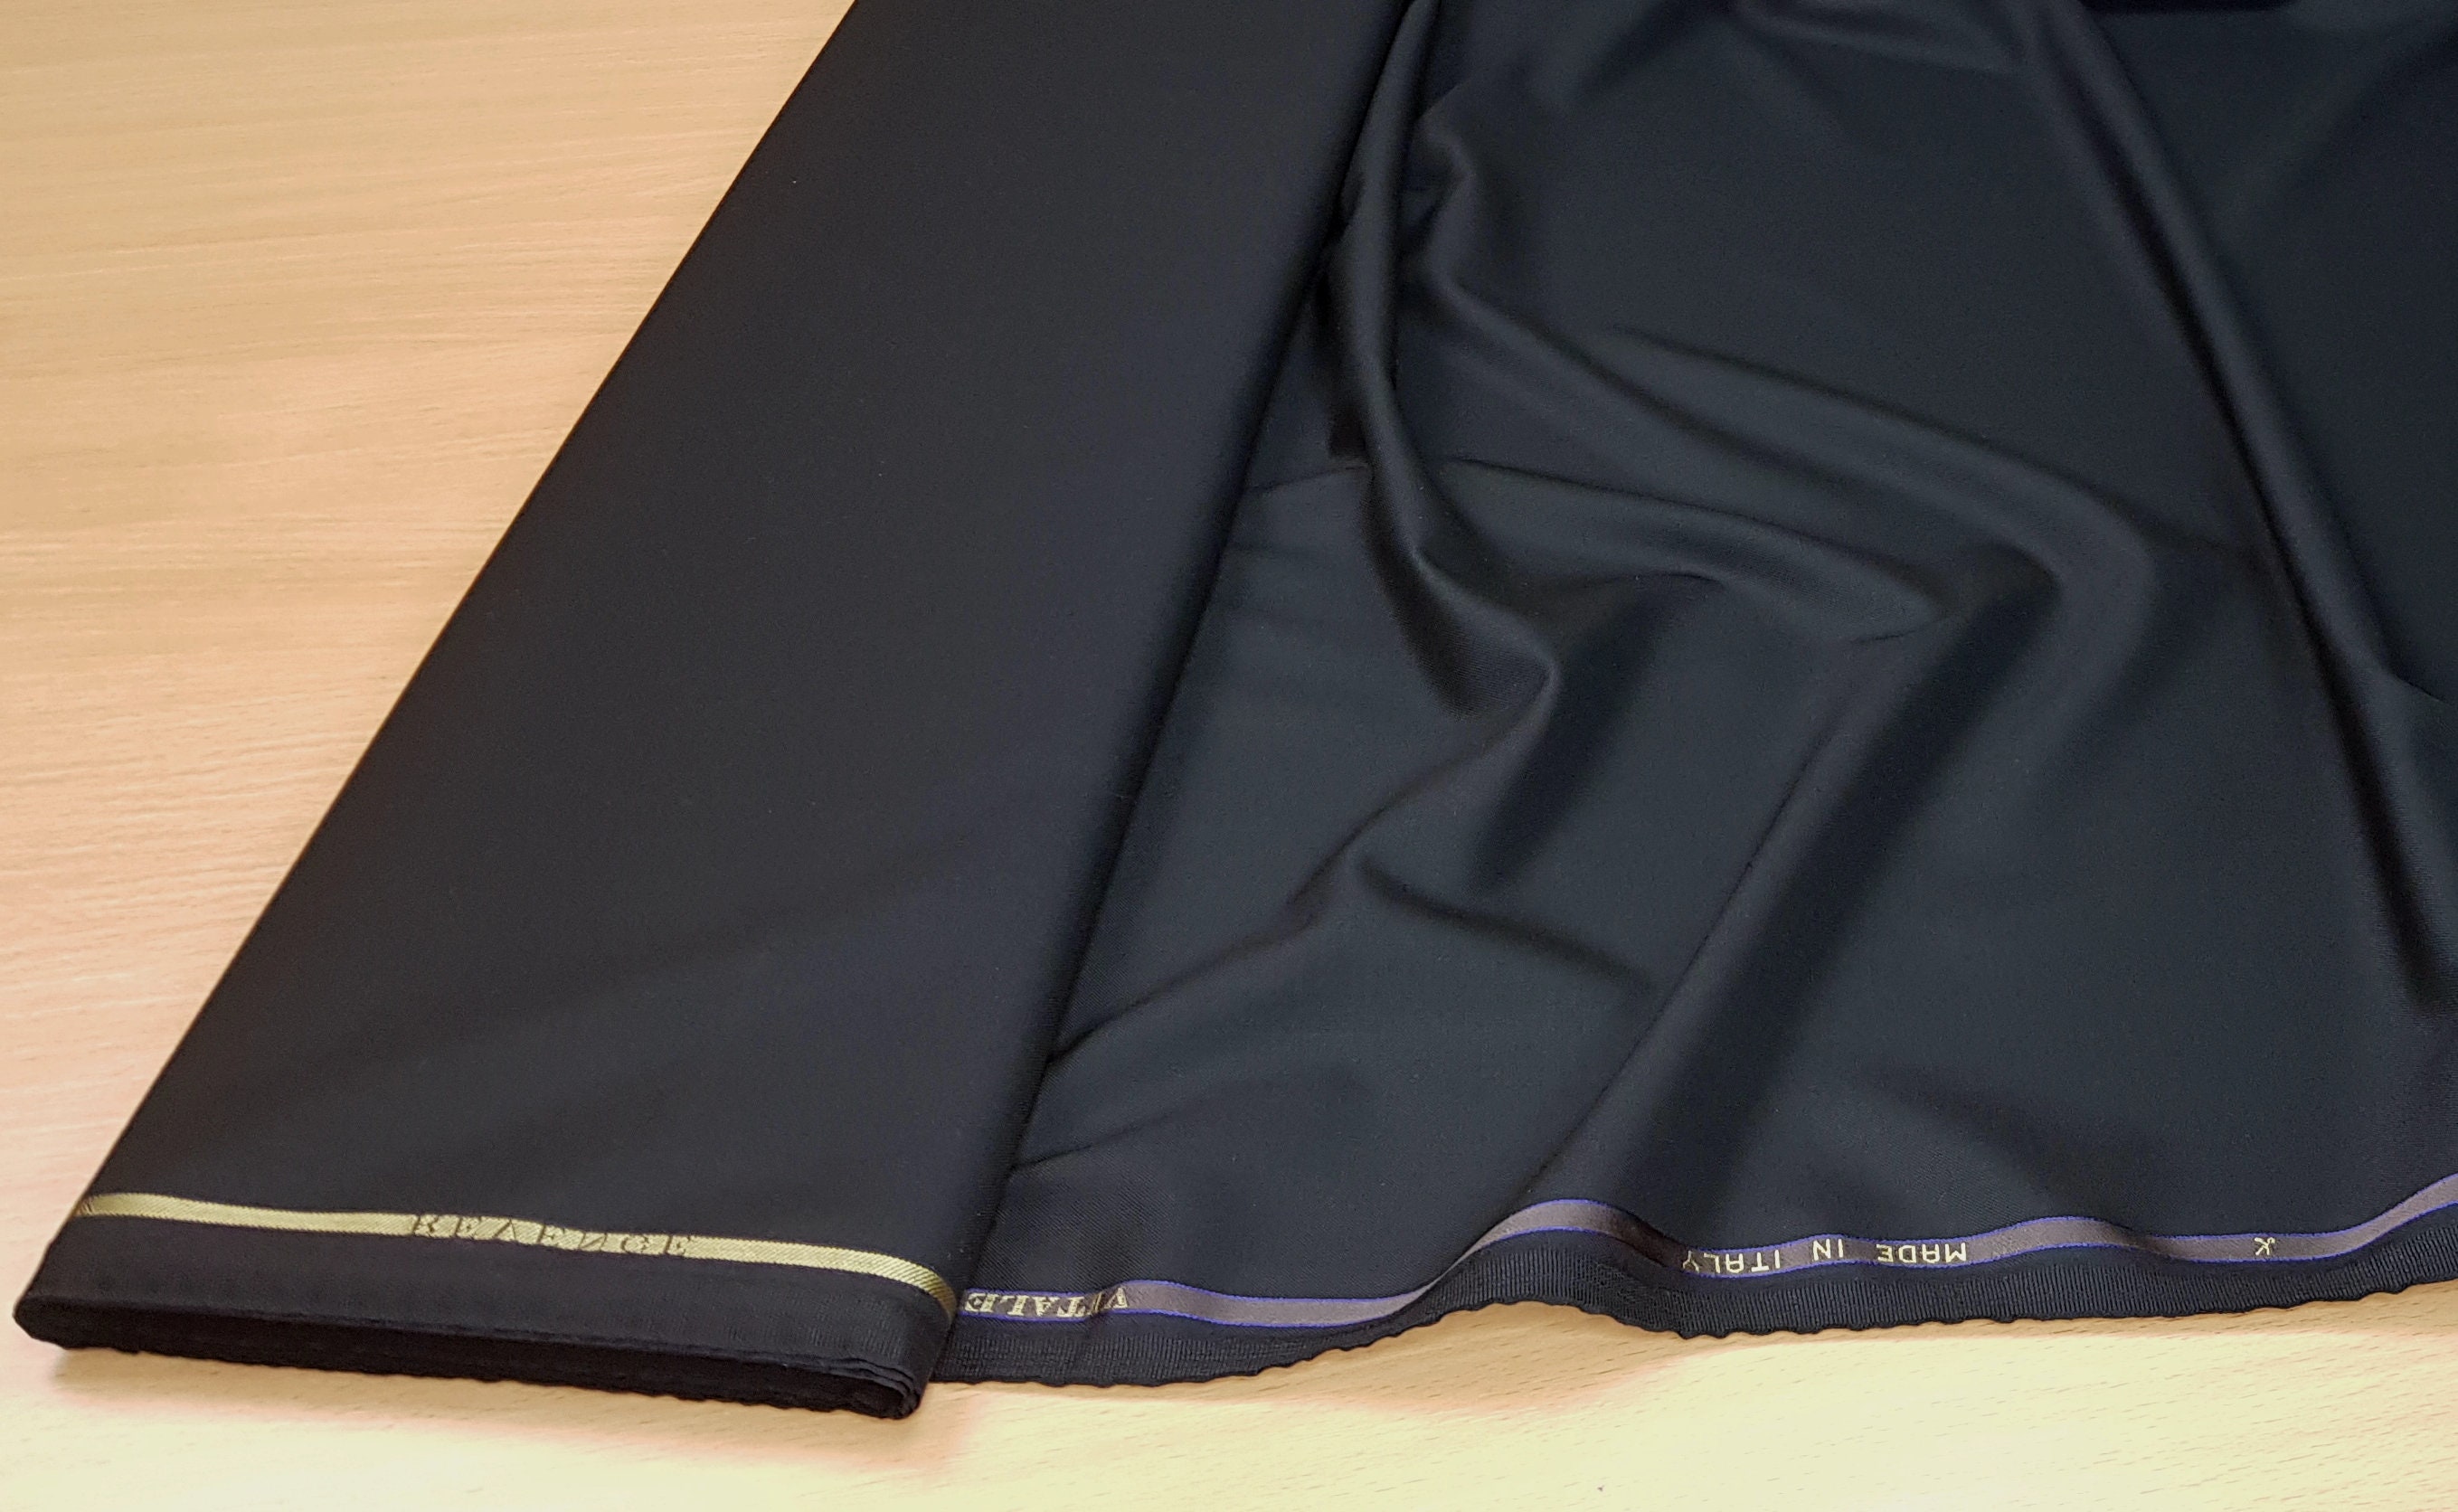 Vitale Barberis Canonico Suiting Black Fabric 100% Wool Super -  Israel